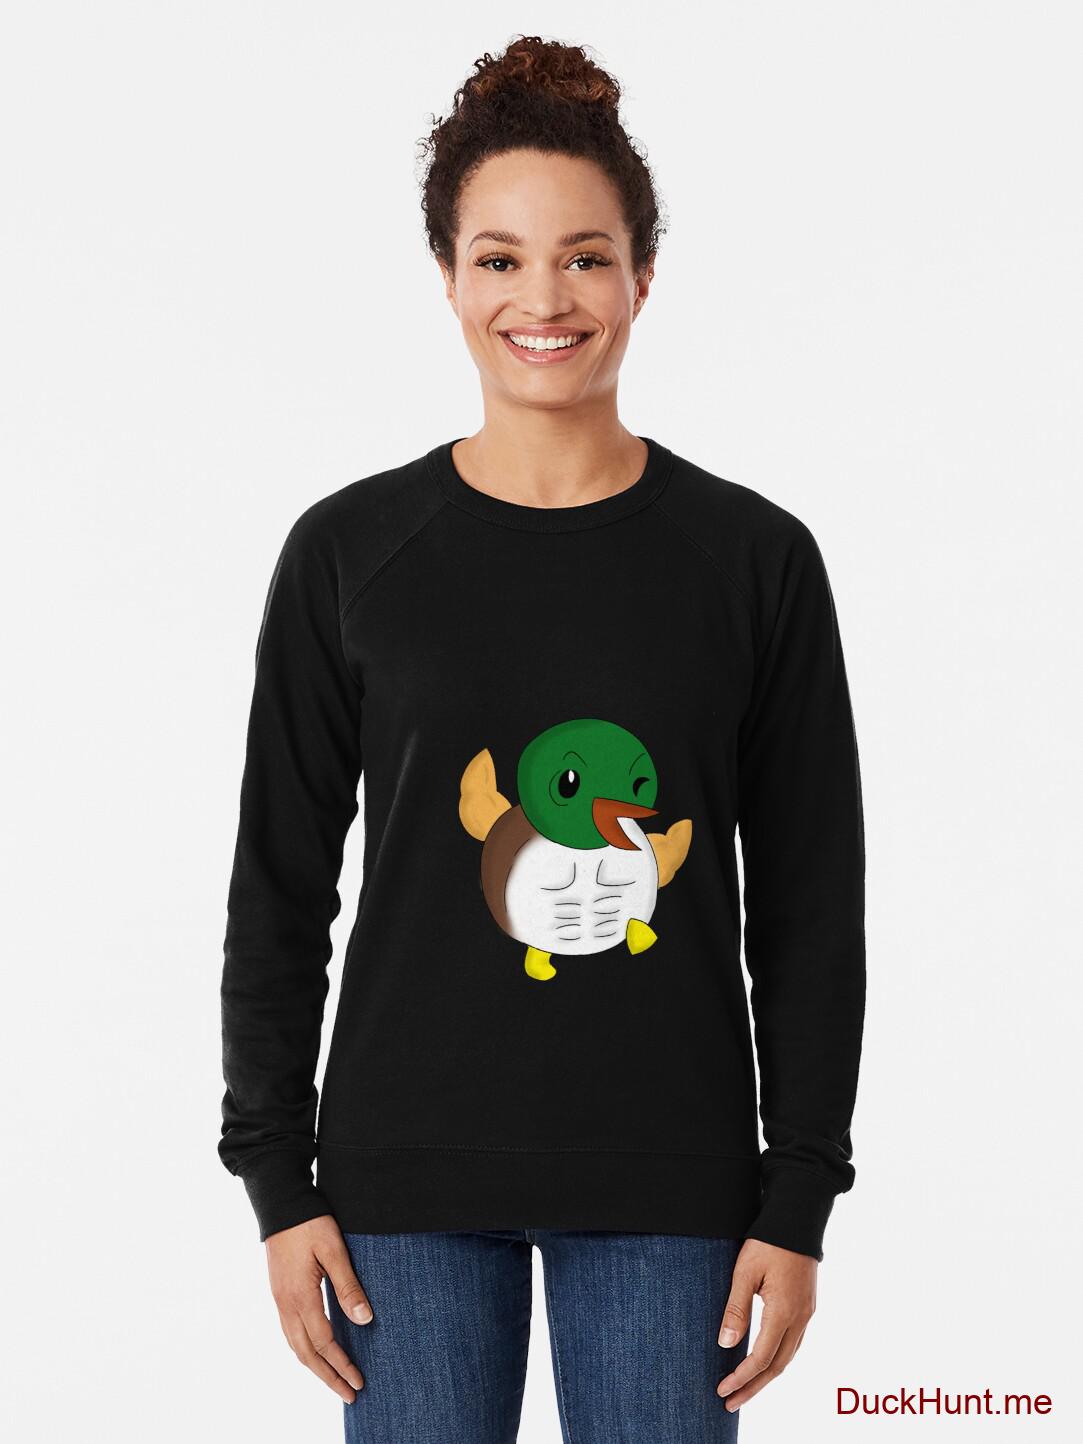 Super duck Black Lightweight Sweatshirt alternative image 1